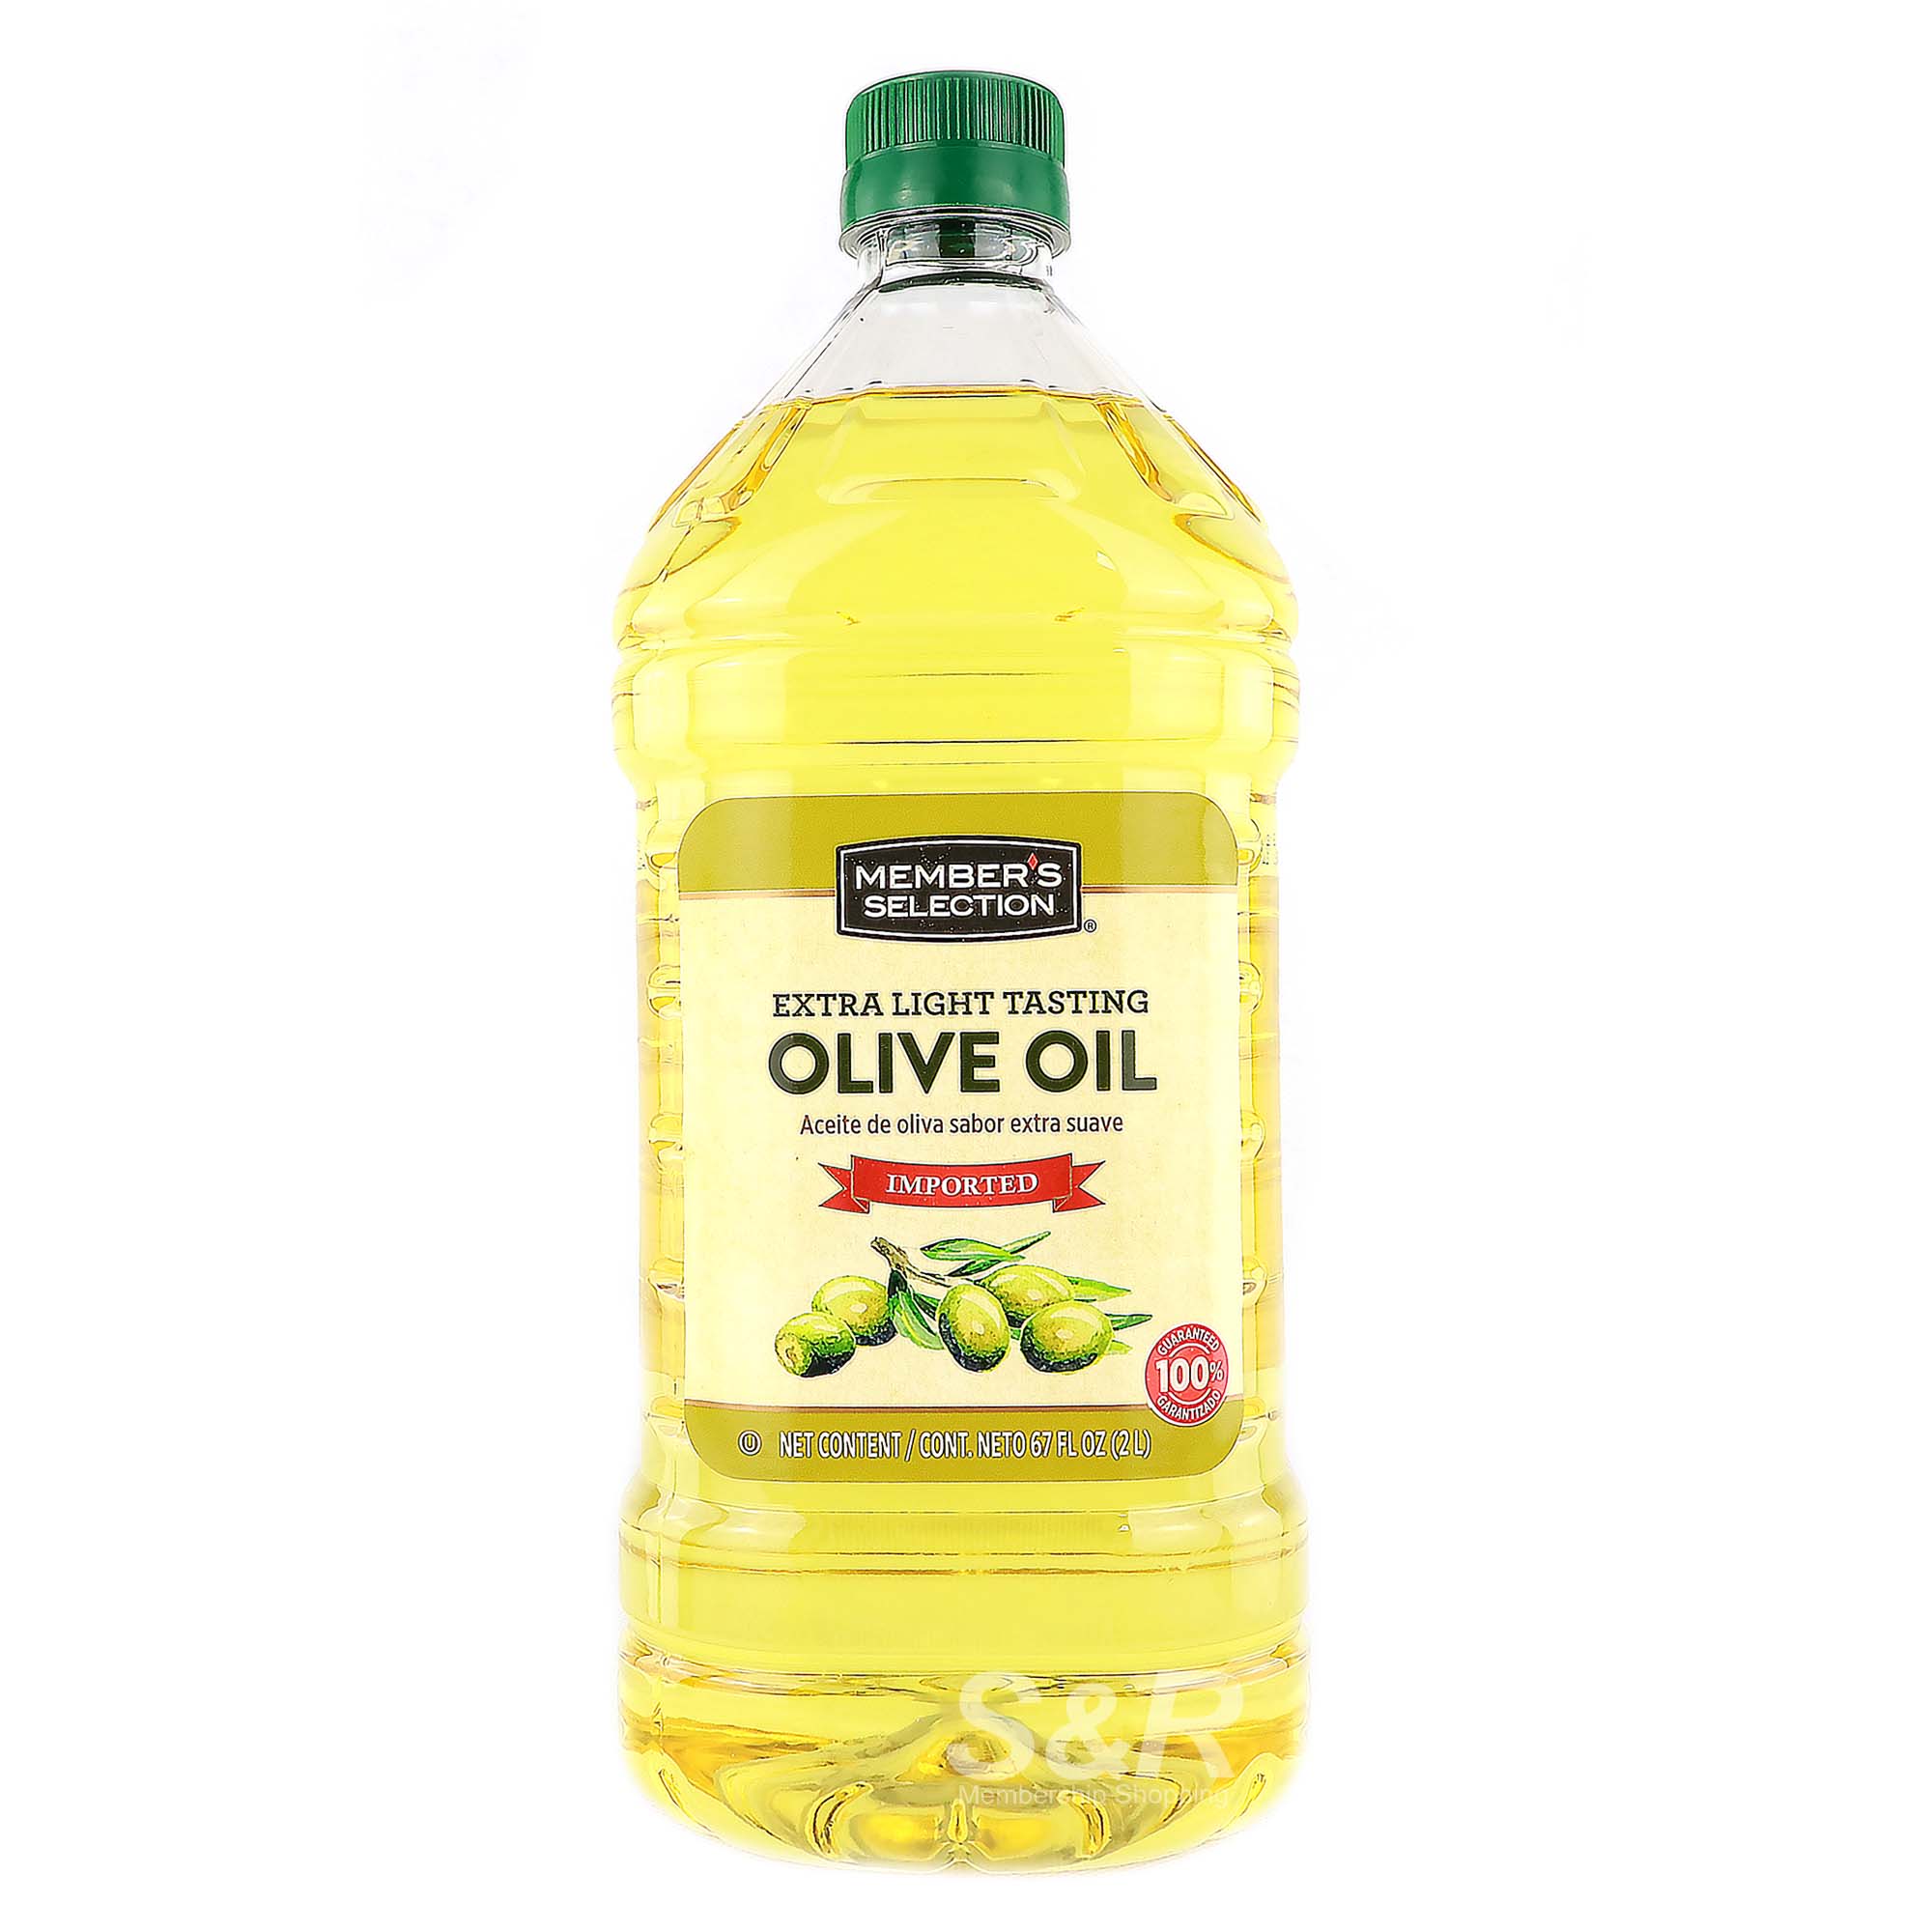 Member's Selection Extra Light Tasting Olive Oil 2L